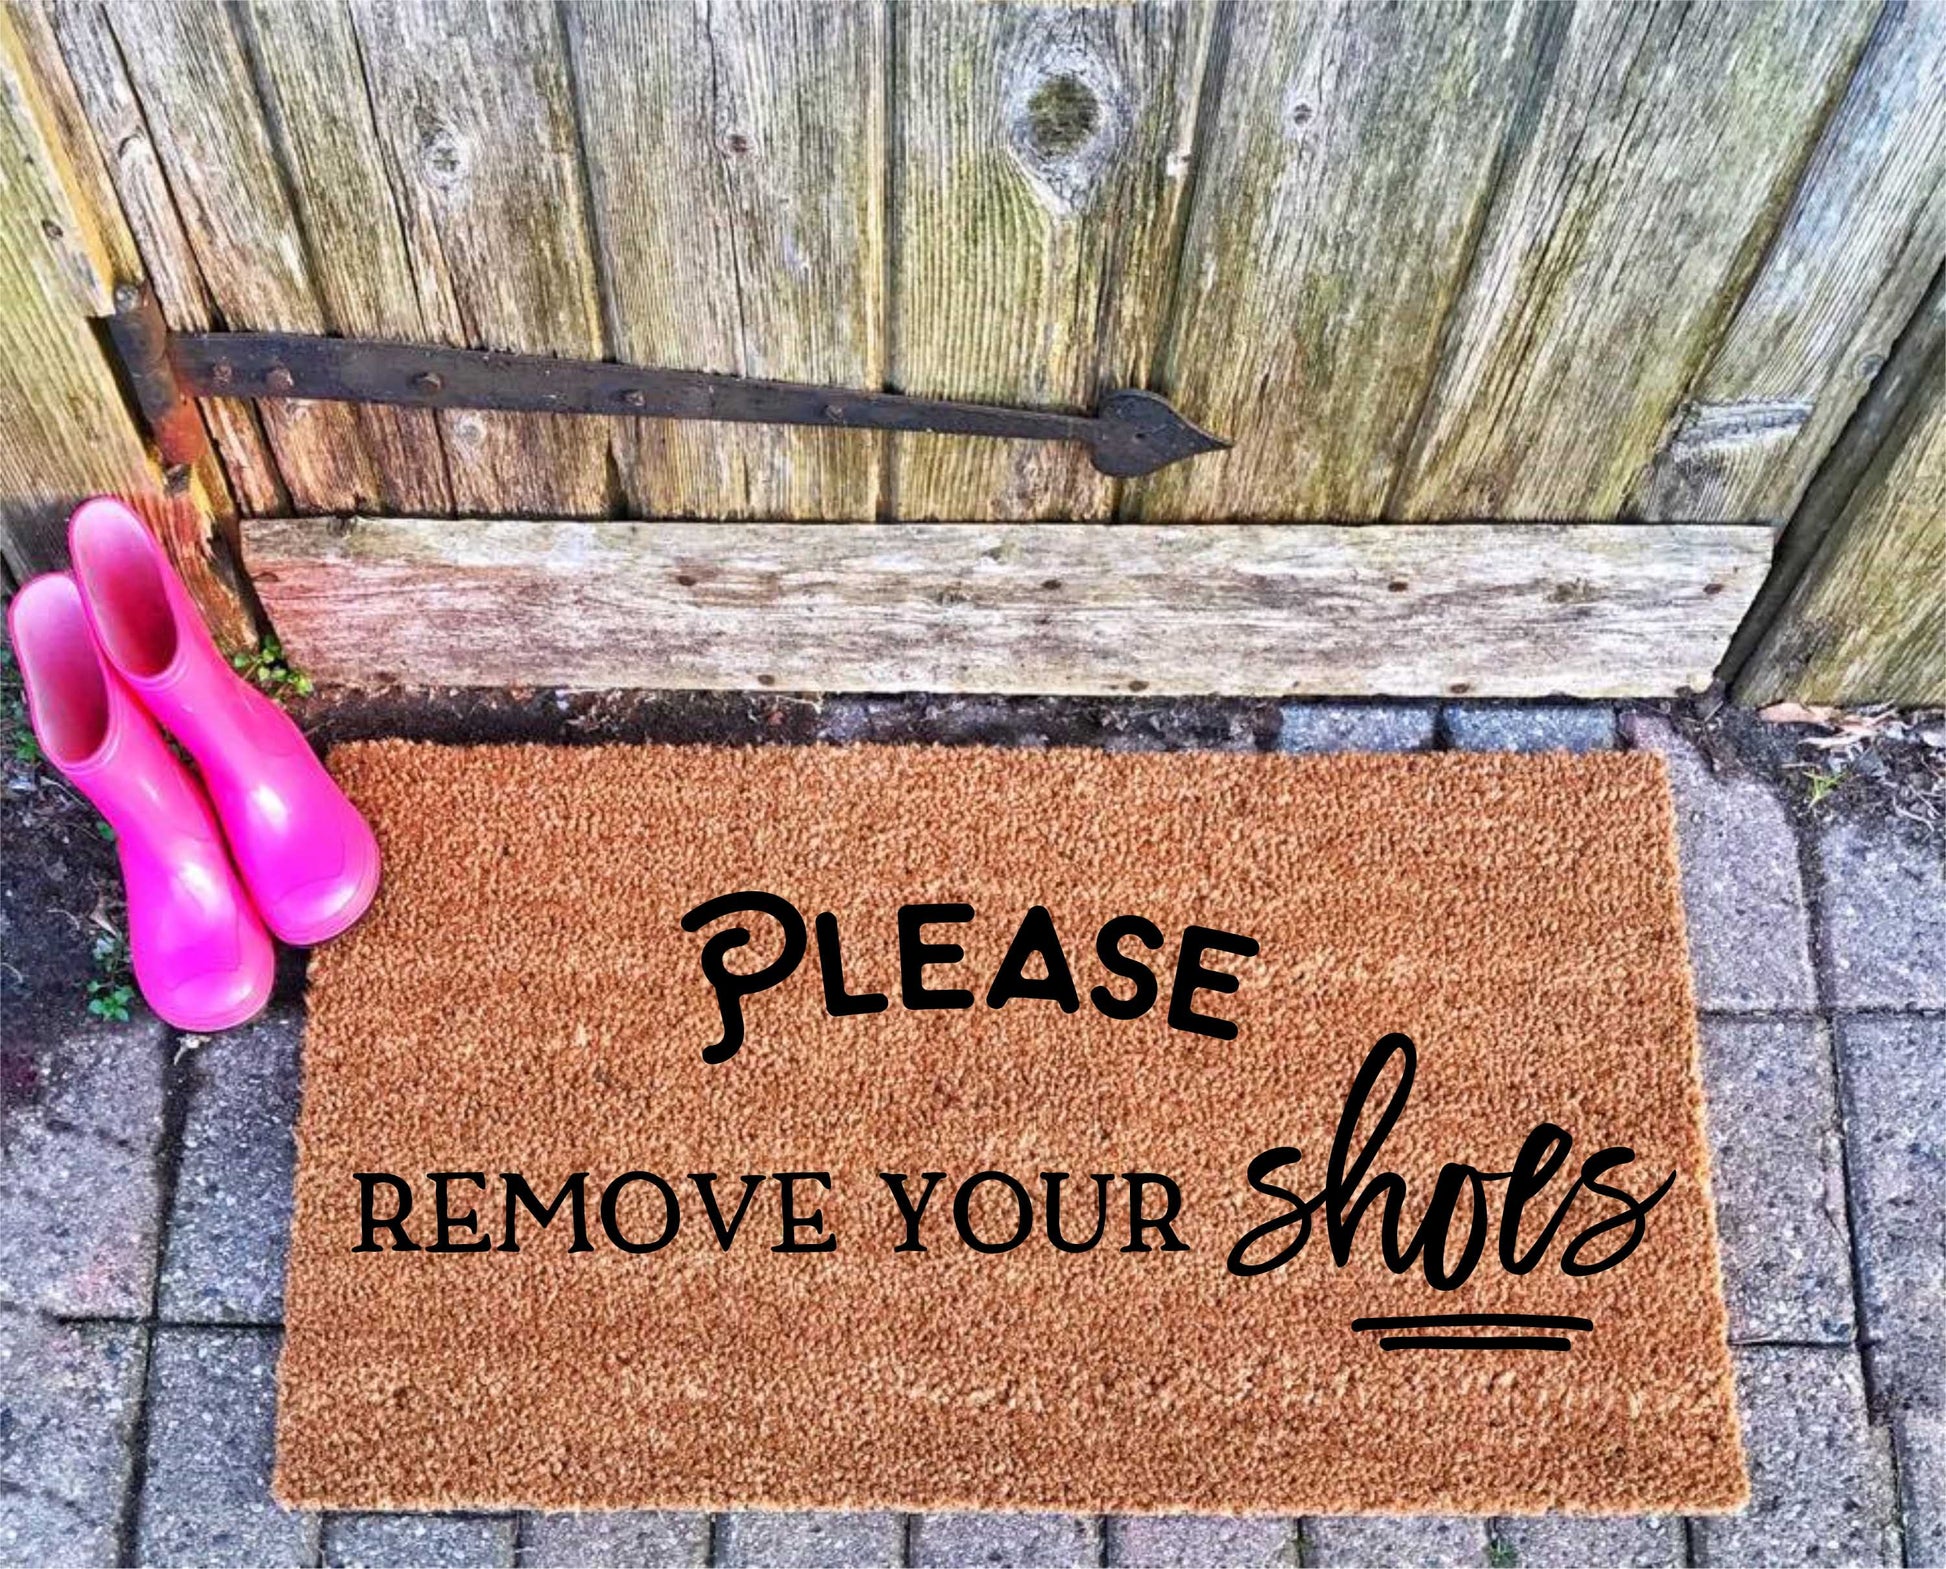 Remove your shoes doormat